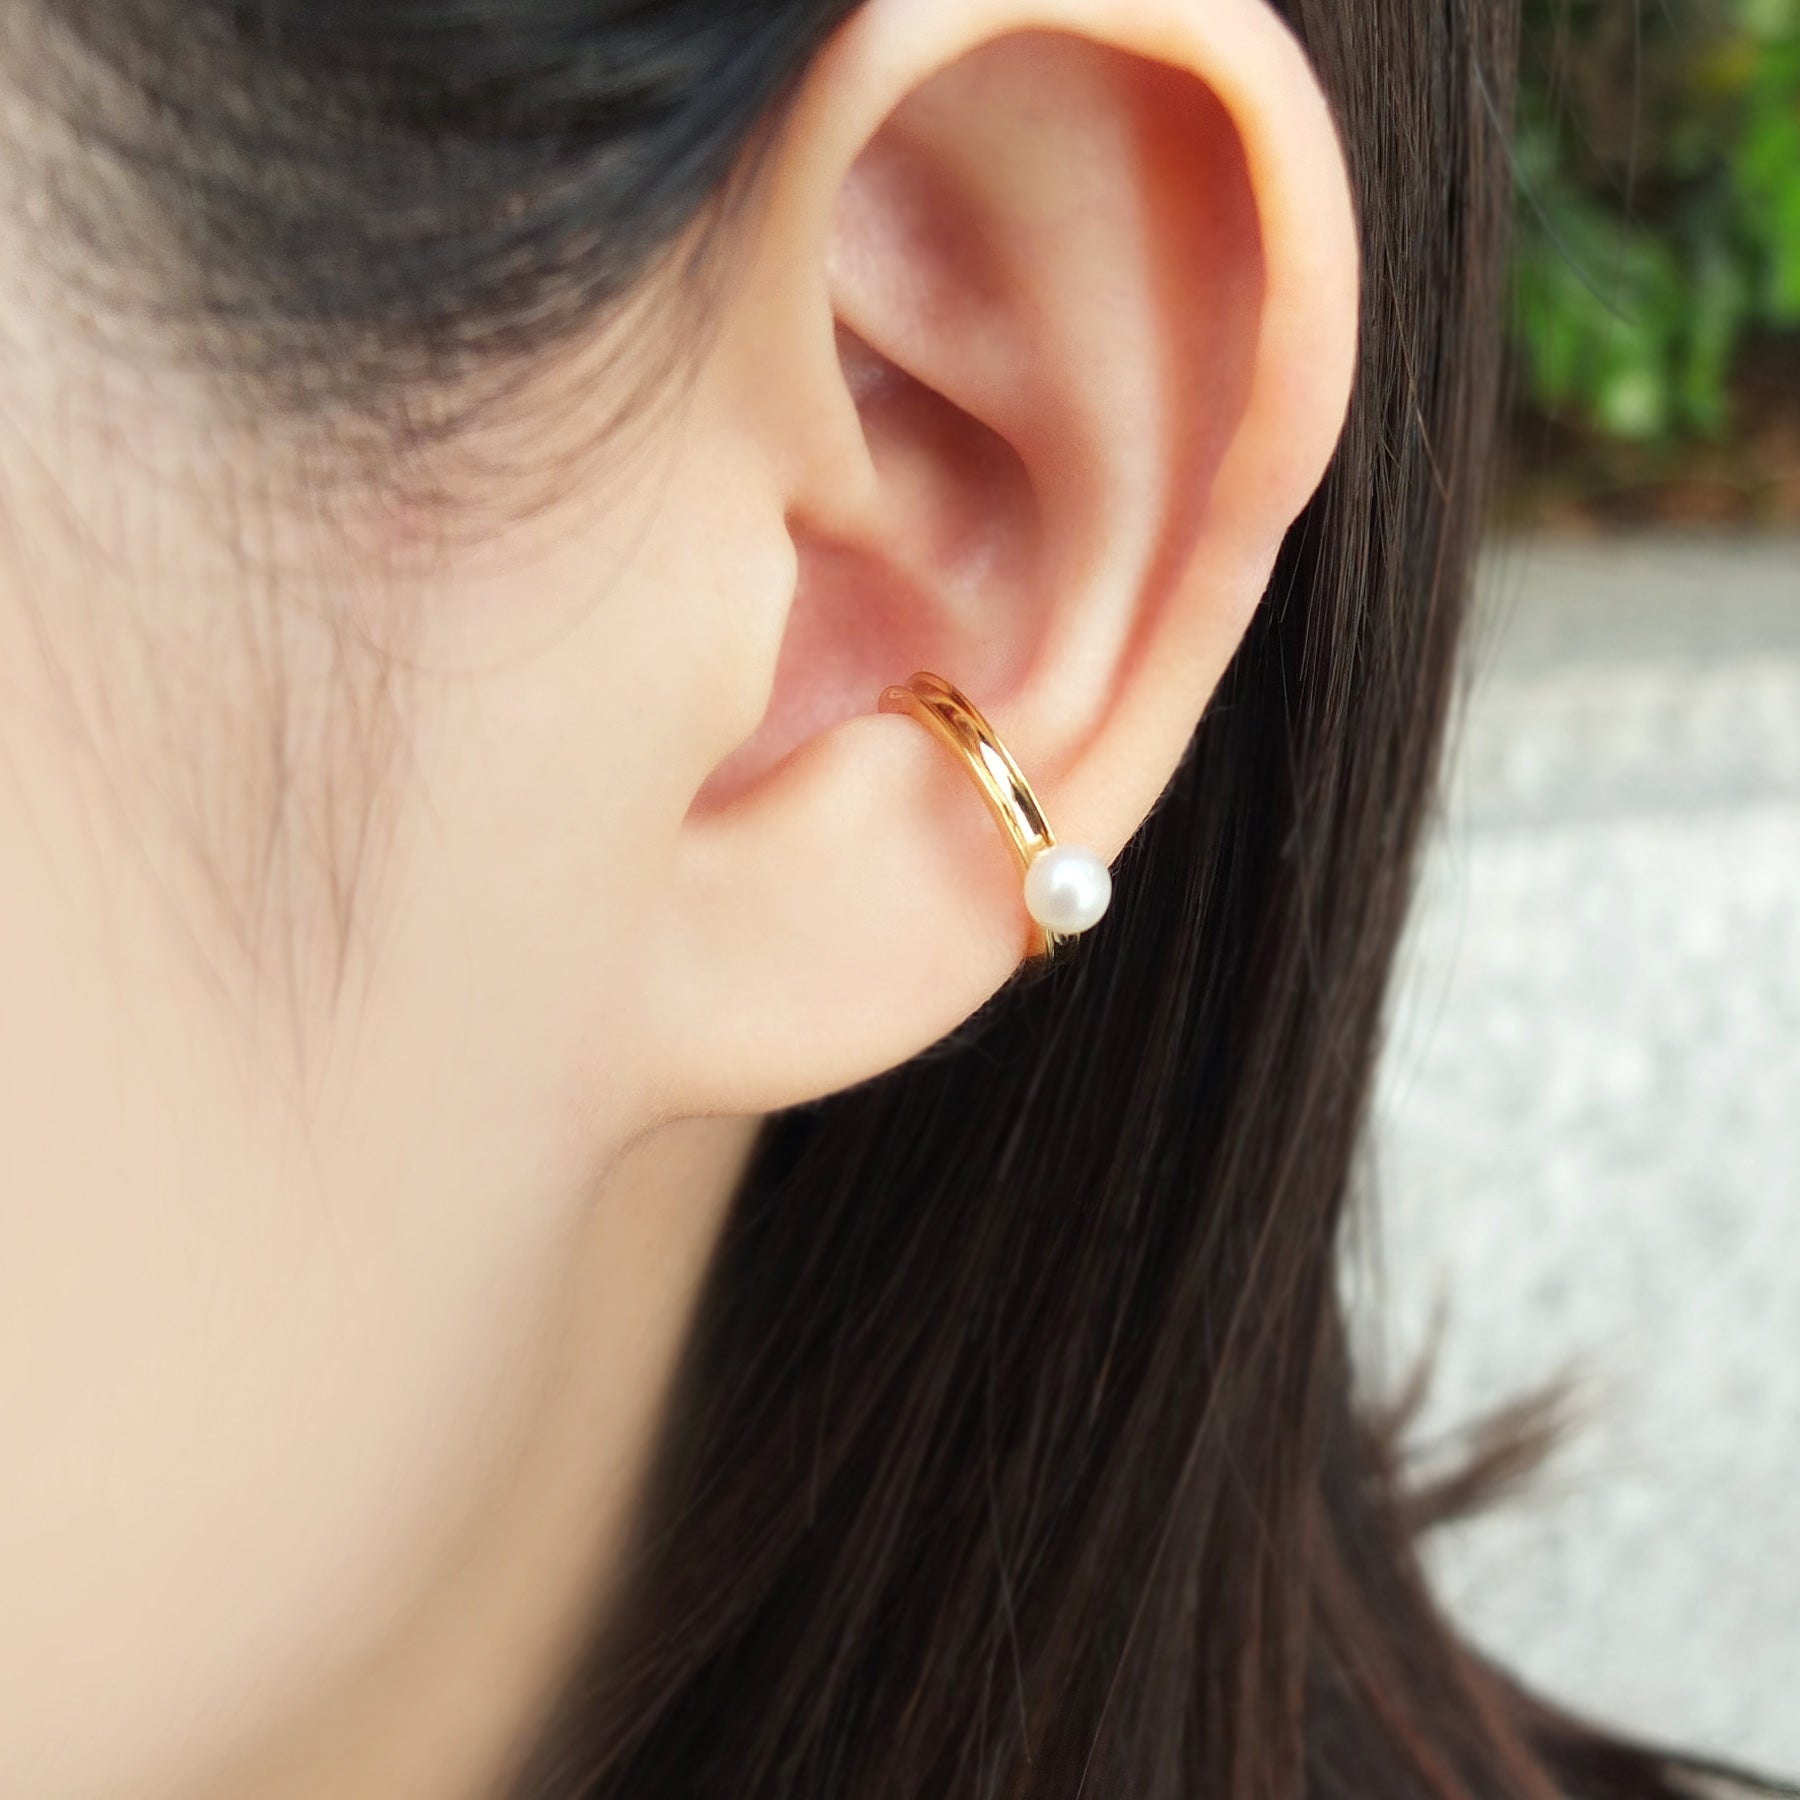 Ear Cuffs – TAKE-UP Jewelry